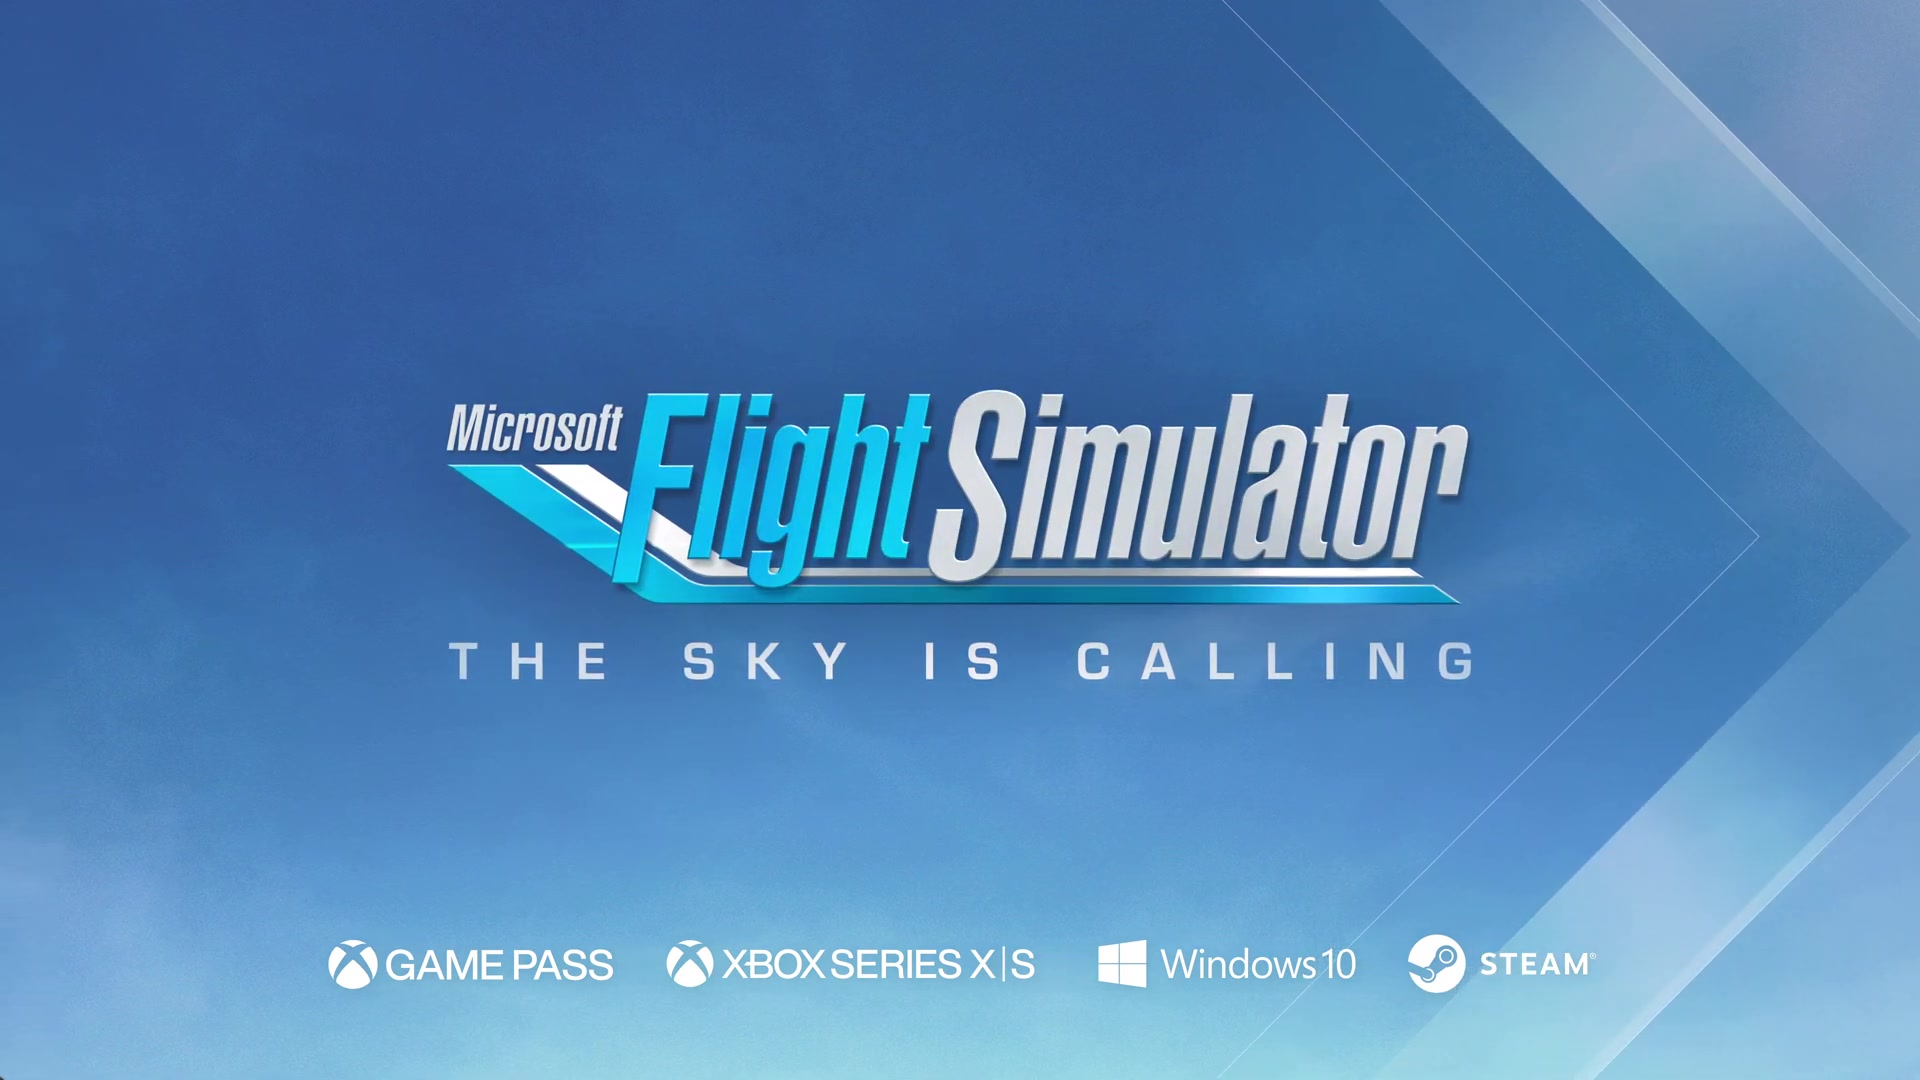 Microsoft Flight Simulator campaign 